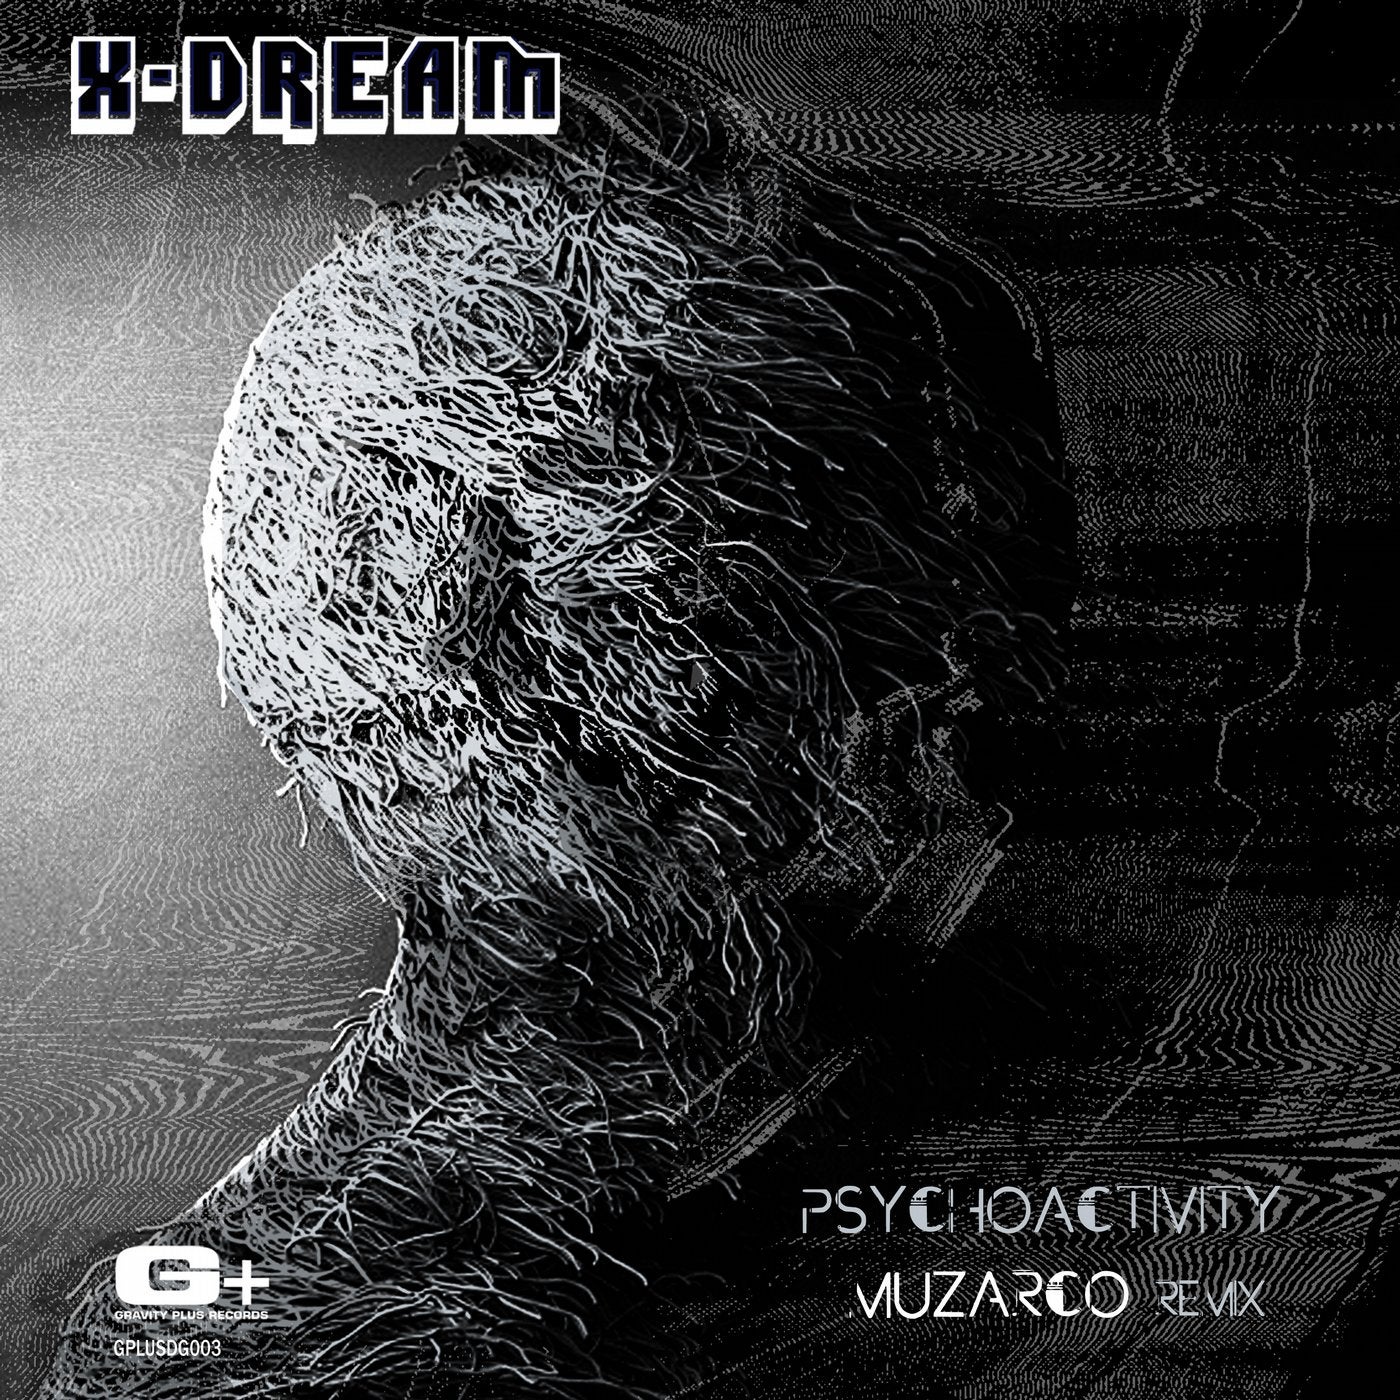 X-Dream "Psychoactivity" Muzarco Remix